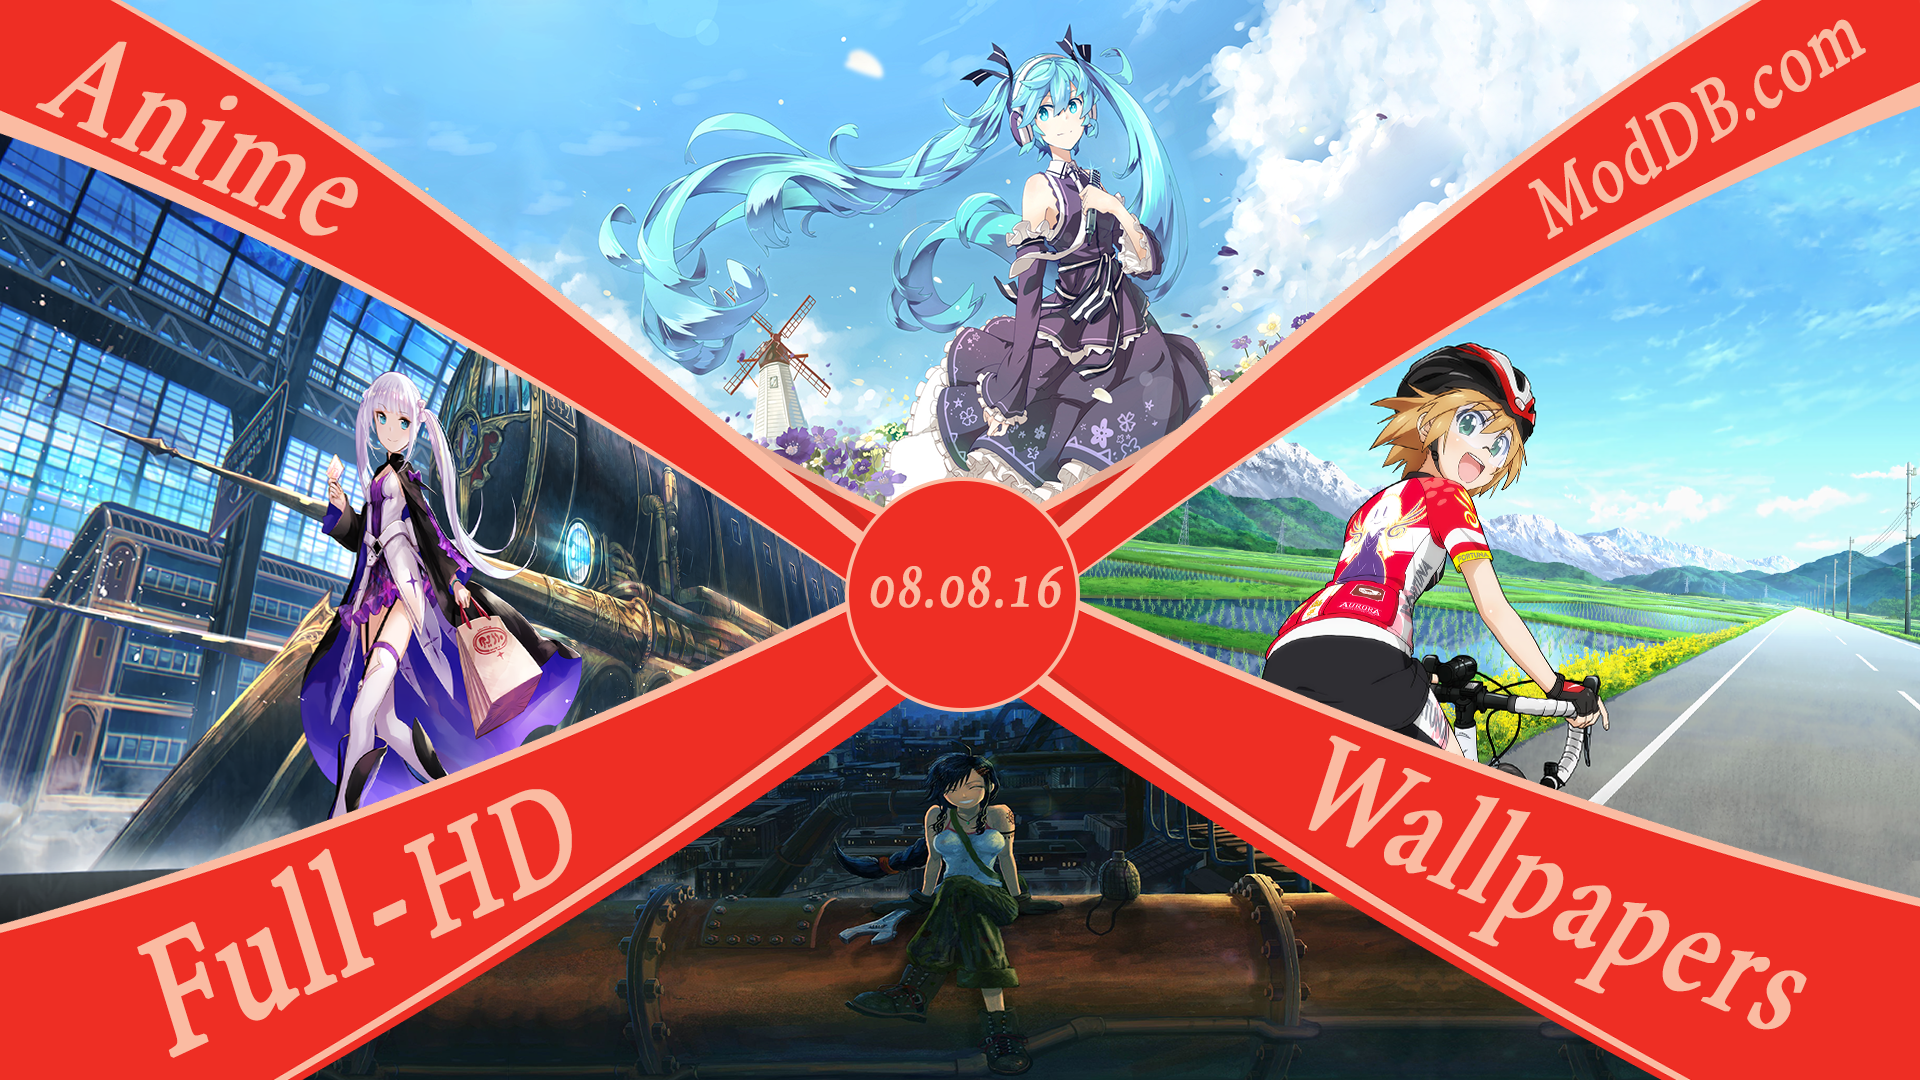 Old Anime Wallpaper's (Full-HD) - 16.06.14 file - Animes' Heaven - ModDB